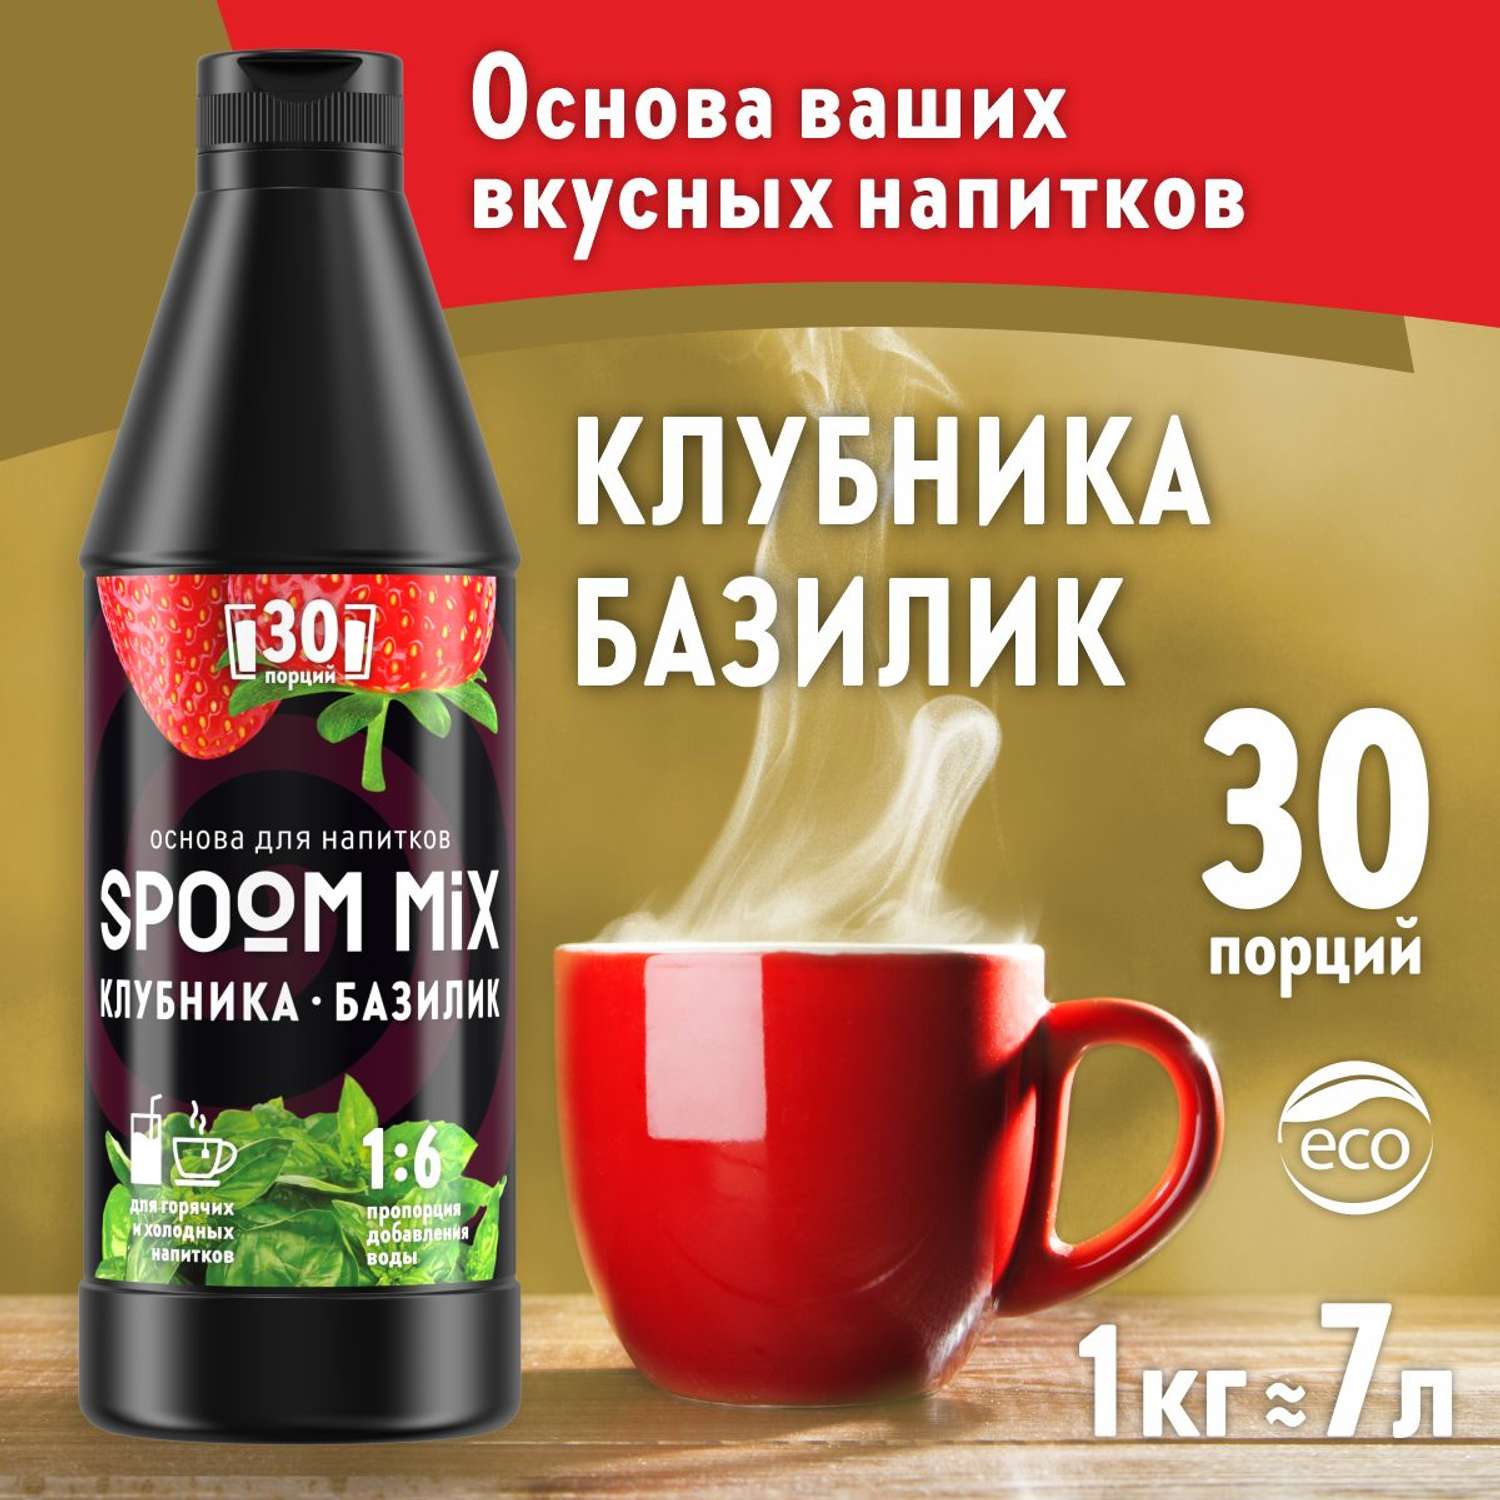 Основа для напитков SPOOM MIX Клубника базилик 1 кг - фото 1